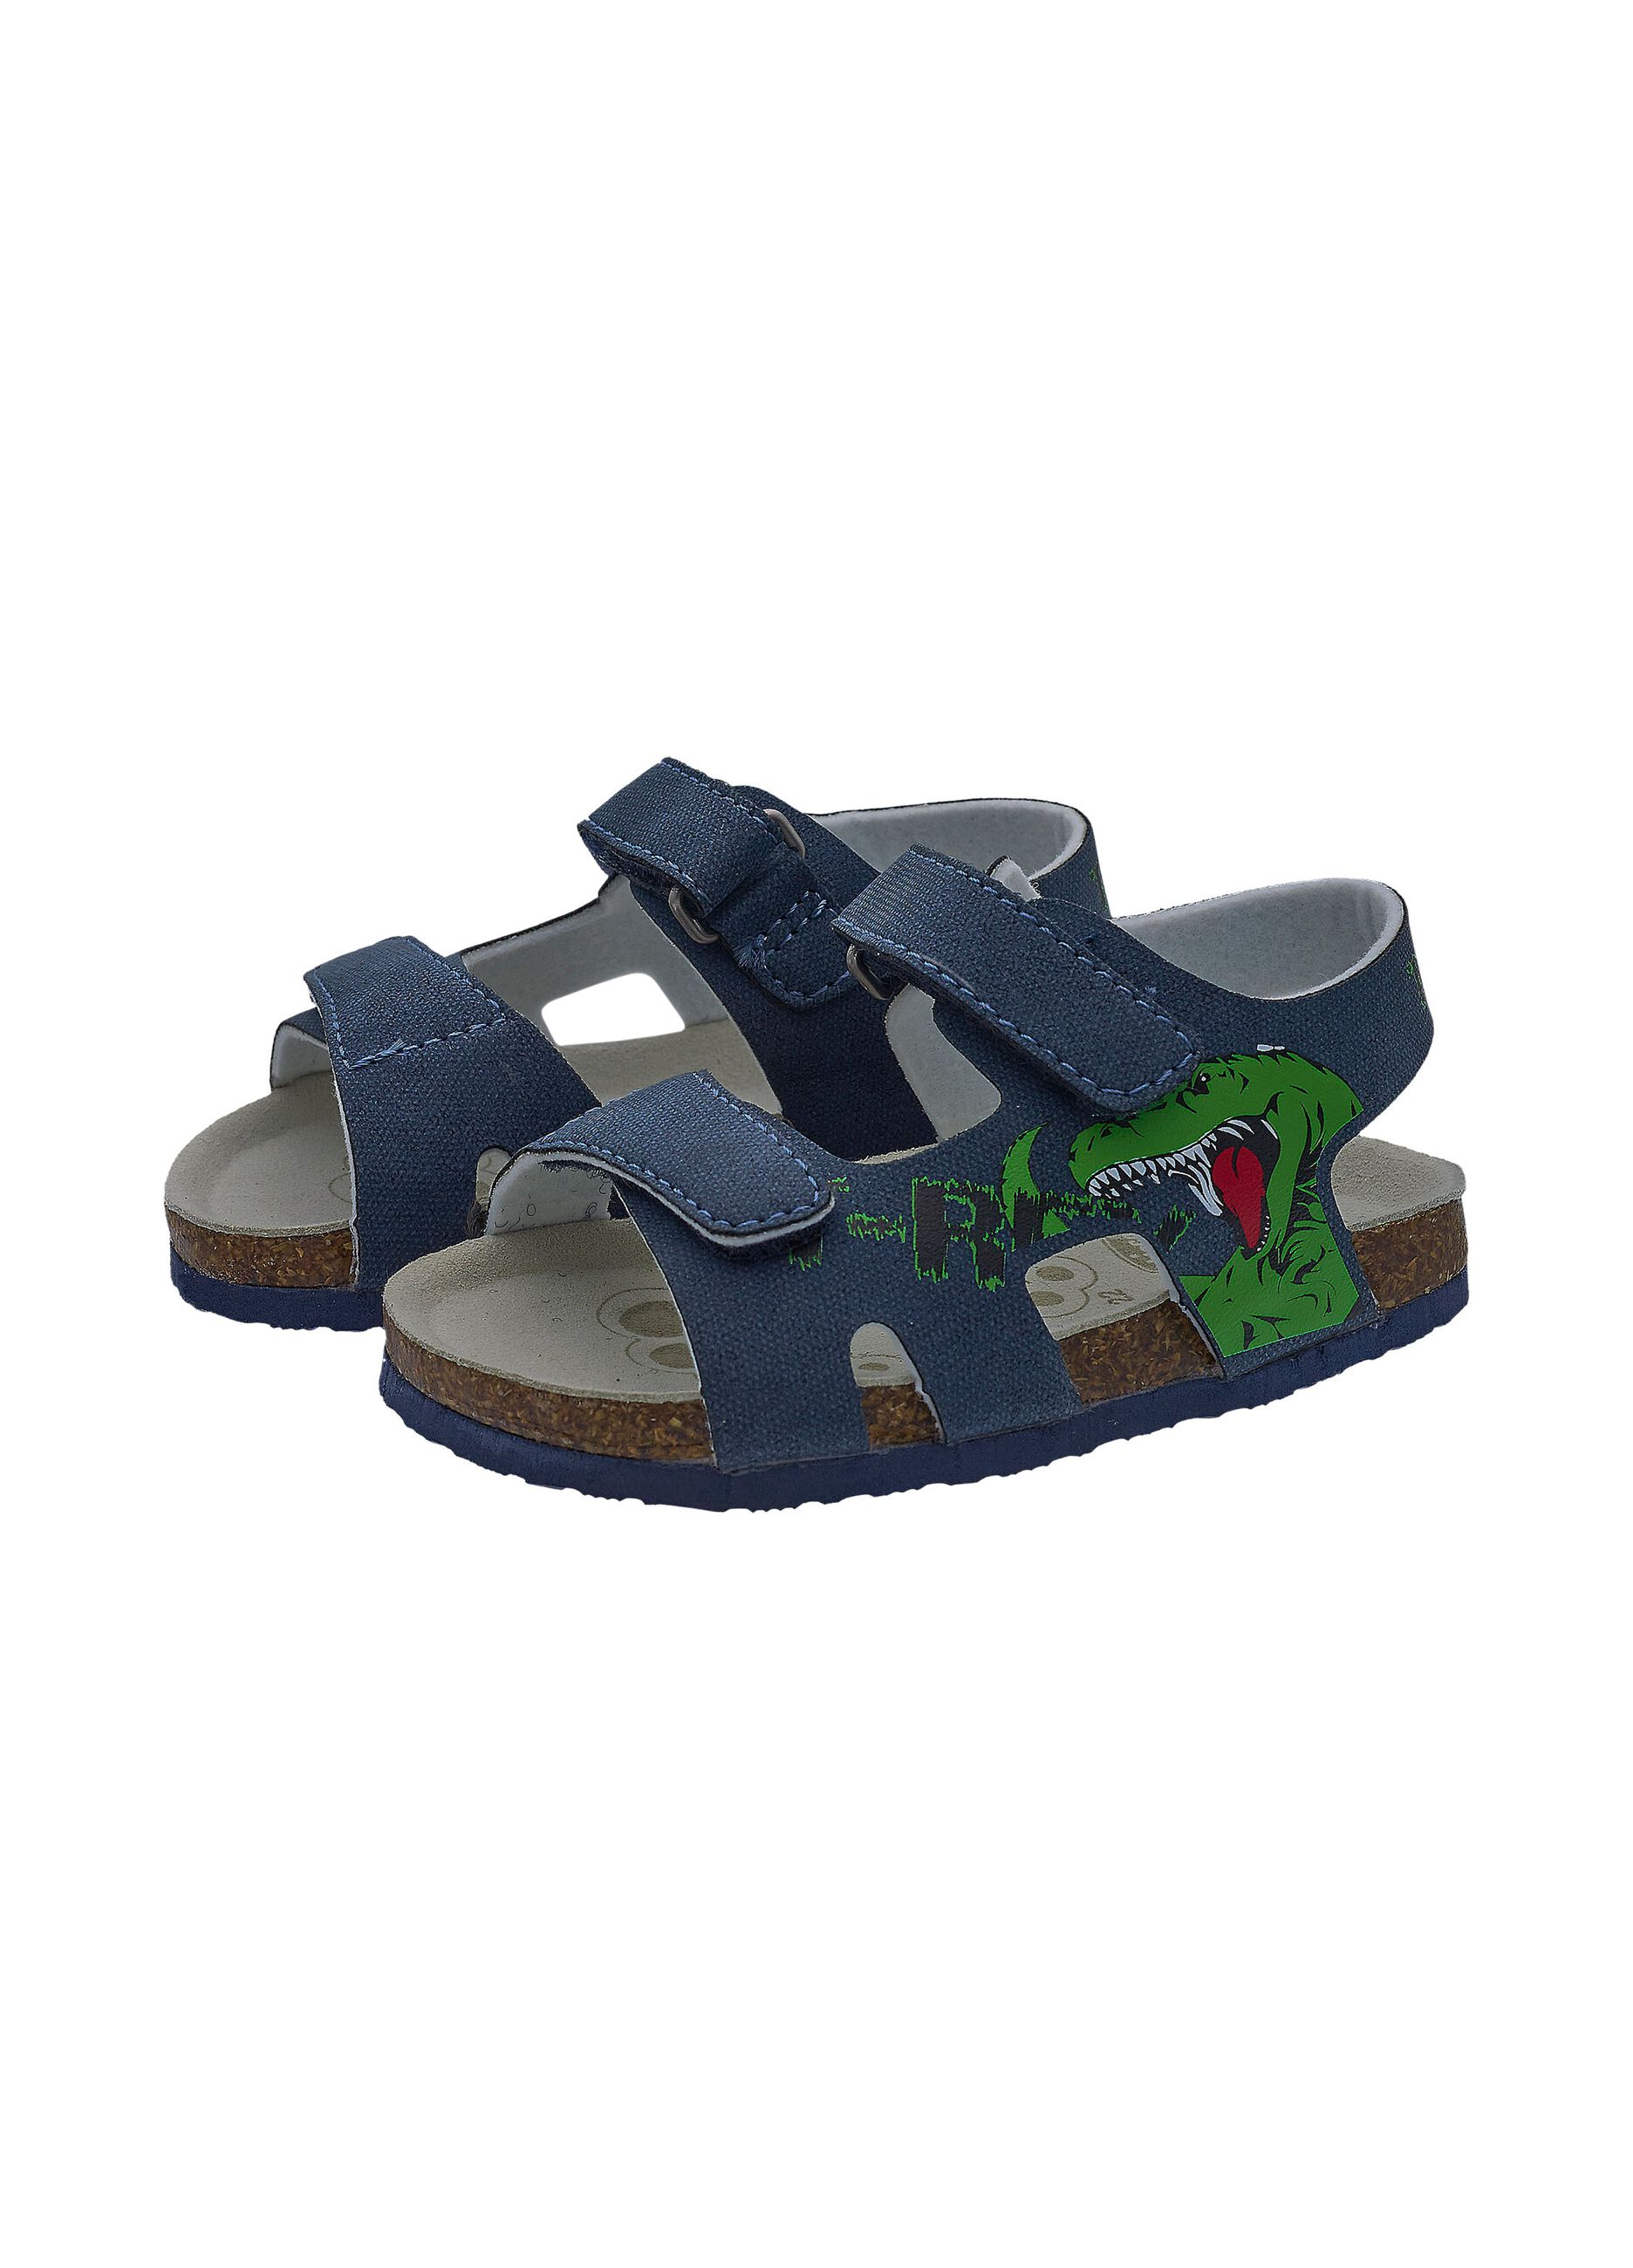 Francisco sandals with dinosaur print